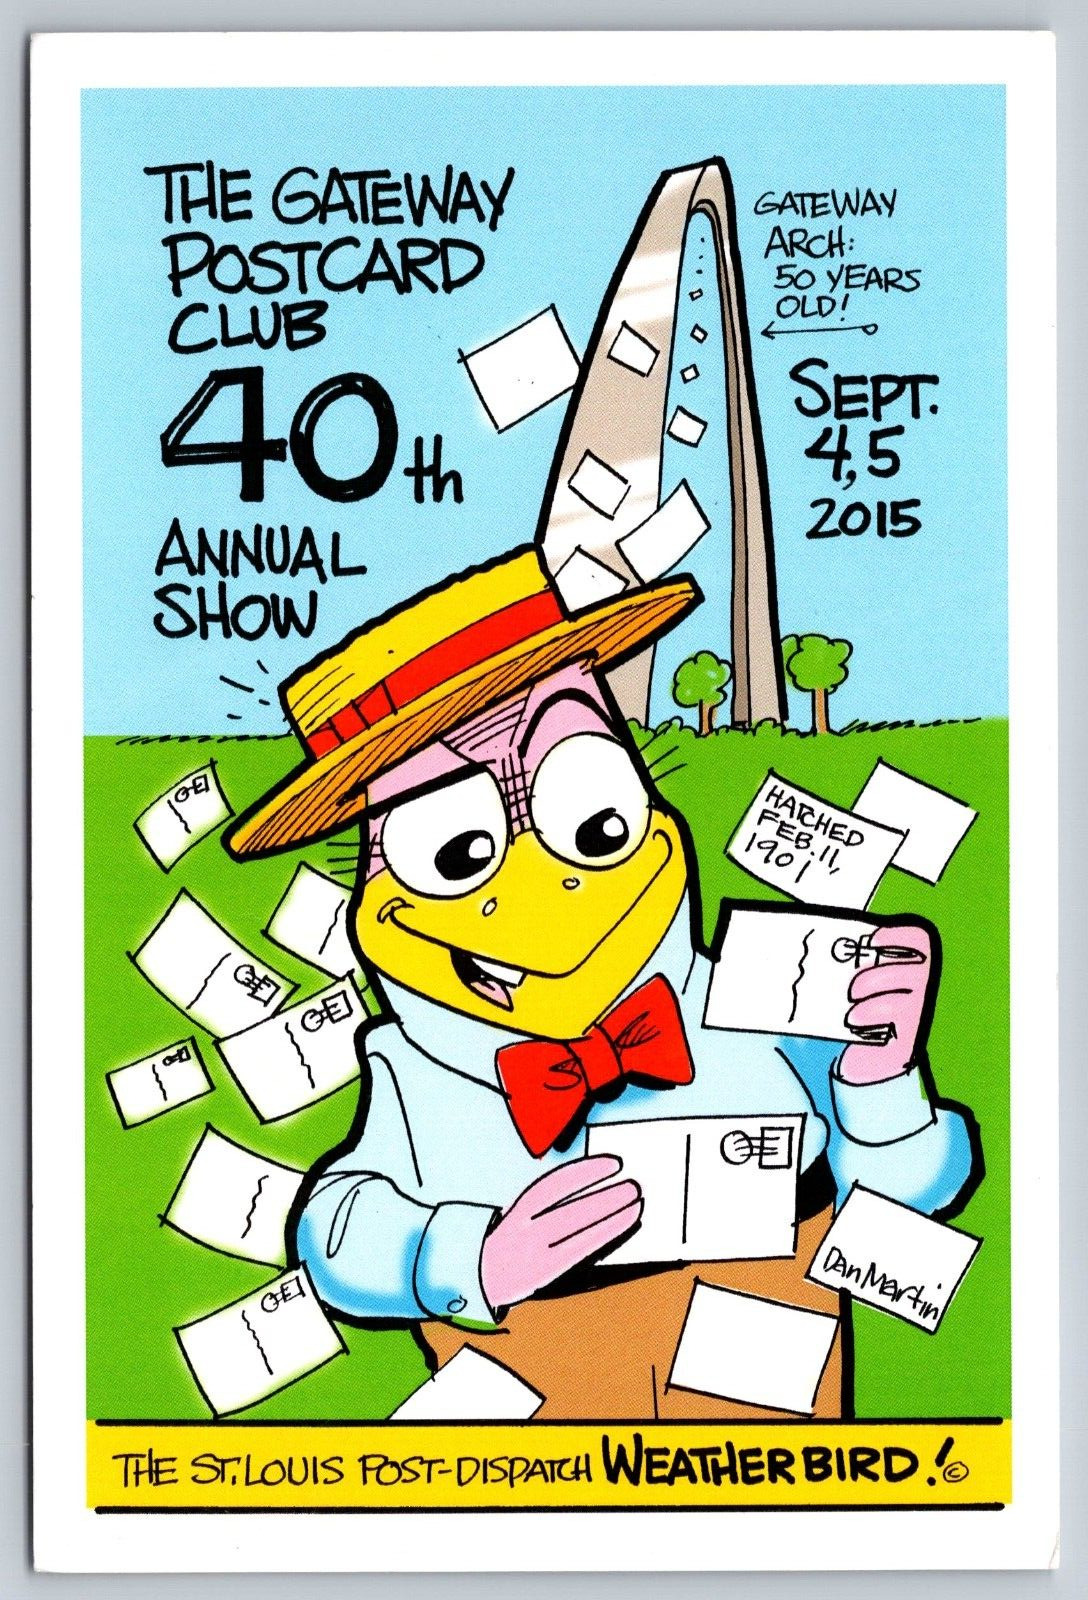 Postcard Advertising Gateway Postcard Club Show 2015 St. Louis 40th Show A11